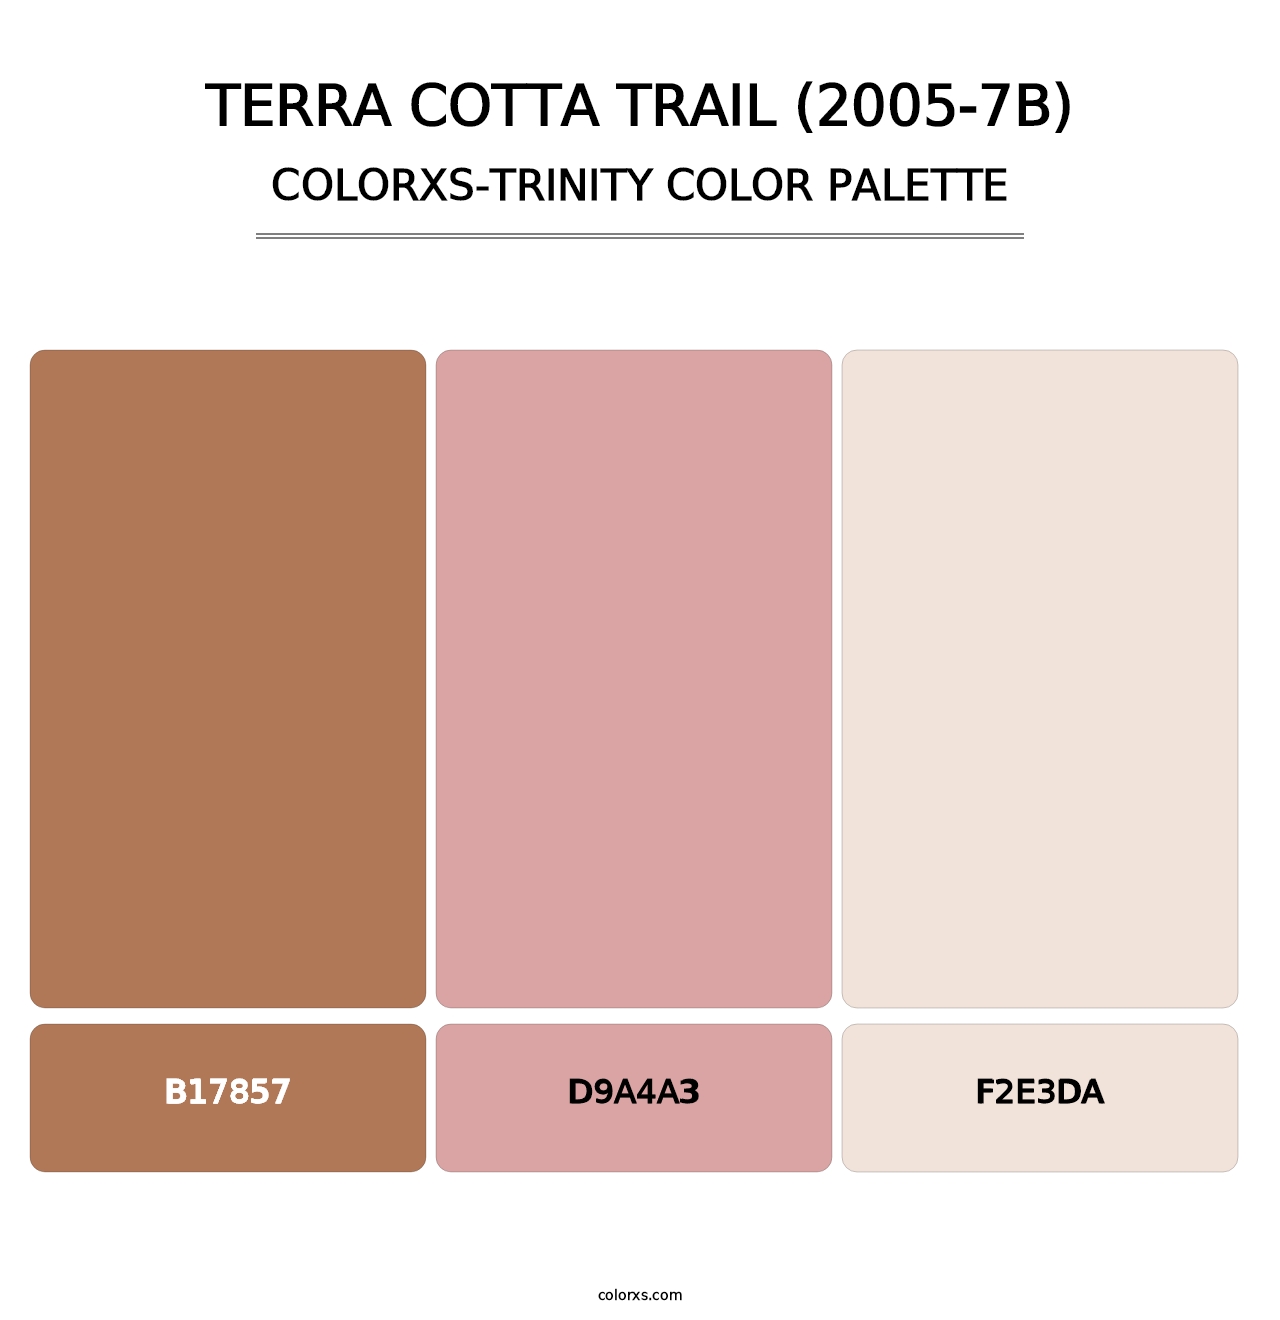 Terra Cotta Trail (2005-7B) - Colorxs Trinity Palette